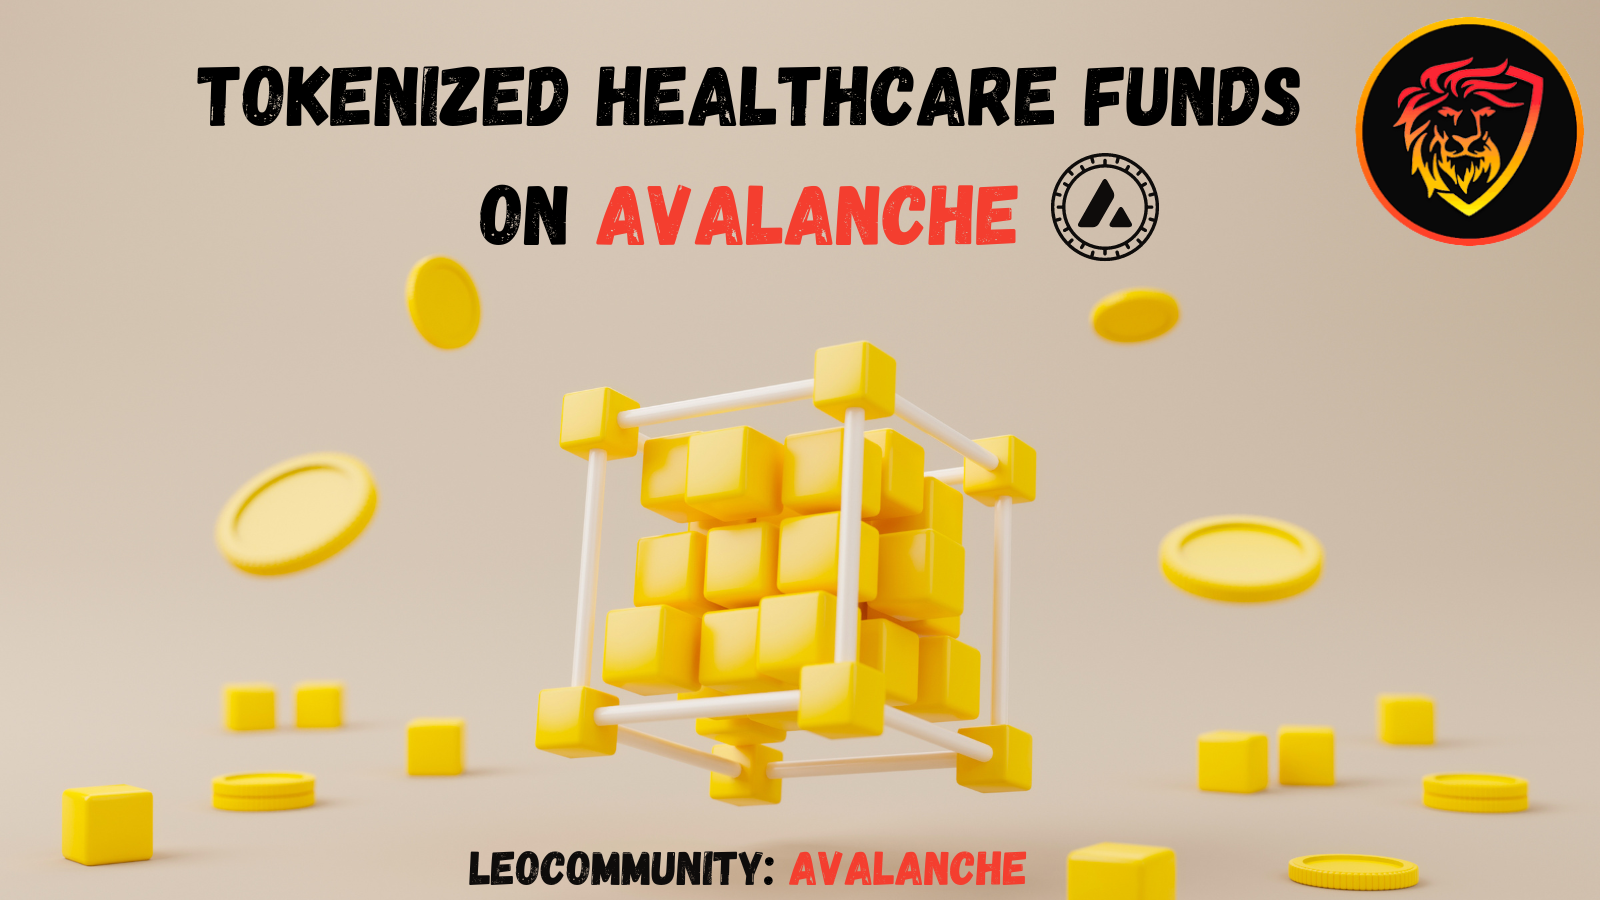 @idiosyncratic1/tokenized-healthcare-focused-fund-on-avalanche